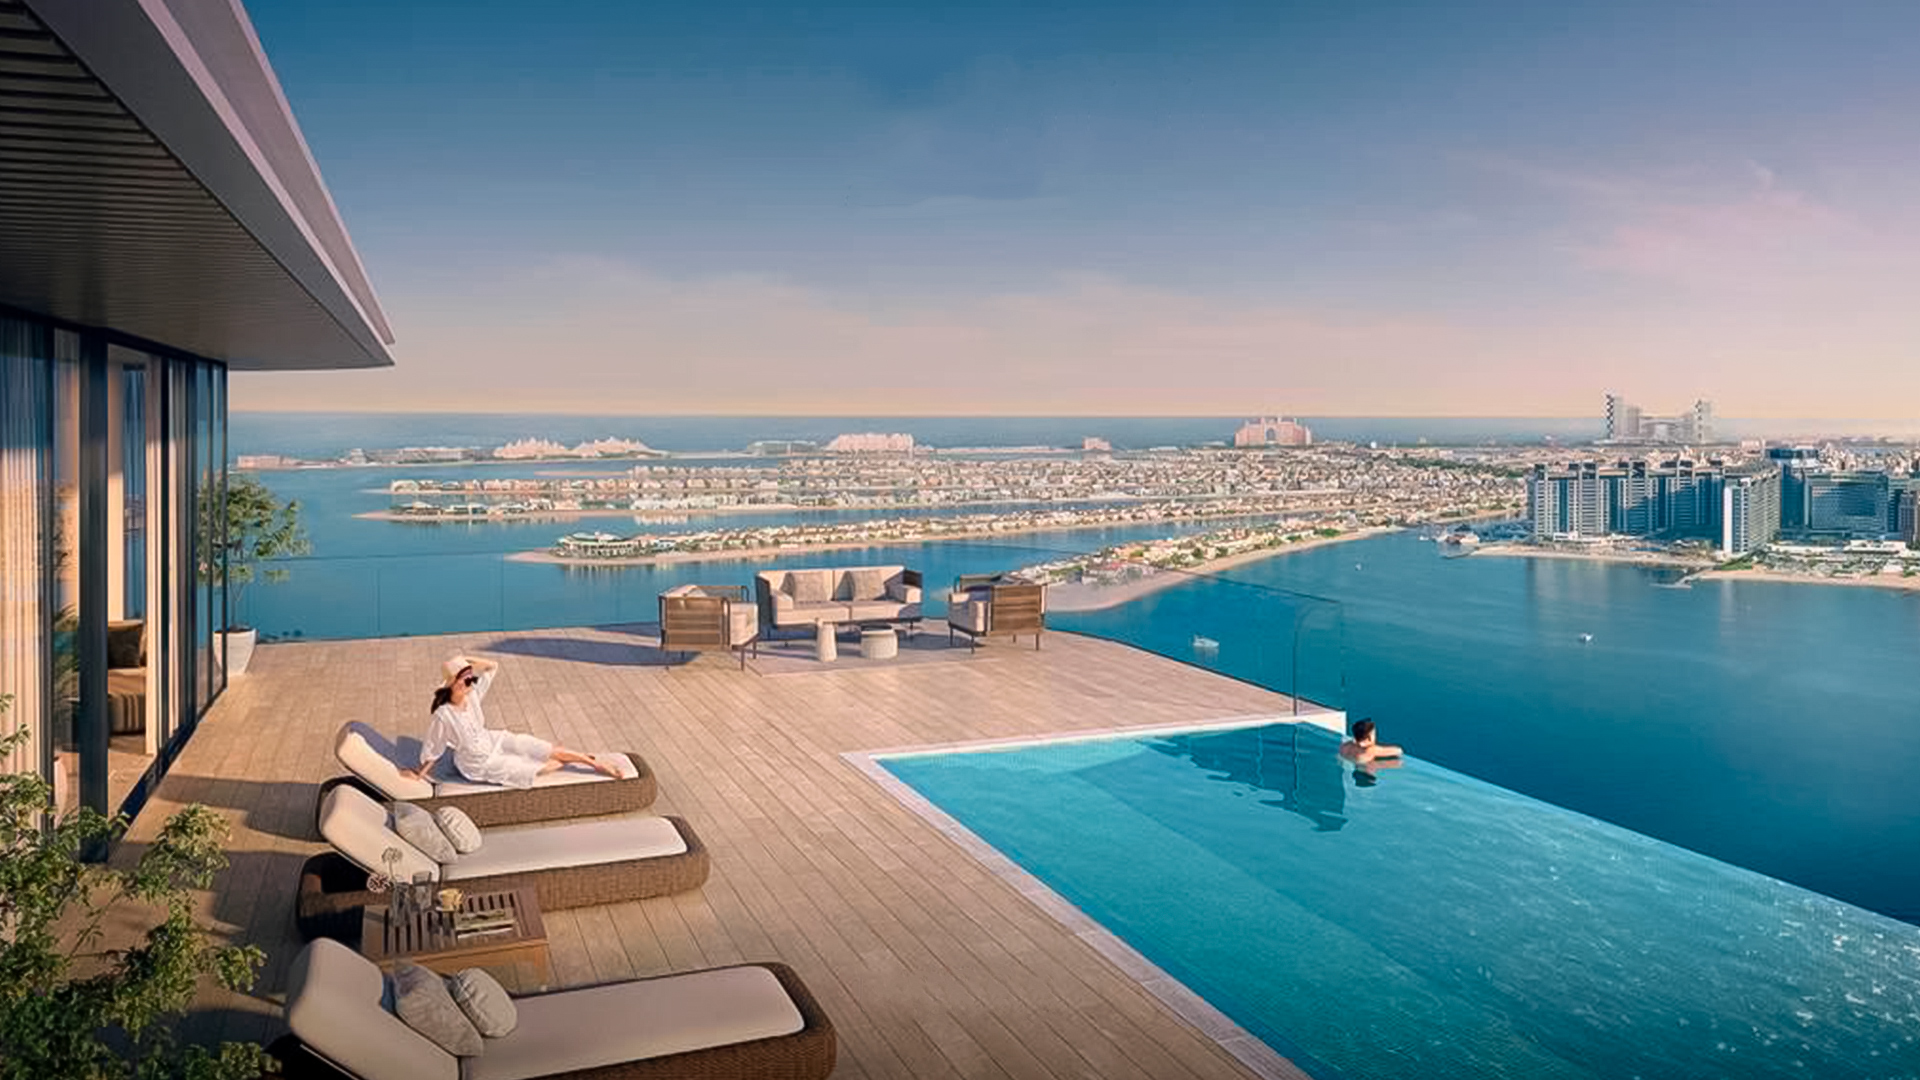 SEAPOINT RESIDENCES от Emaar Properties в Emaar beachfront, Dubai, ОАЭ6